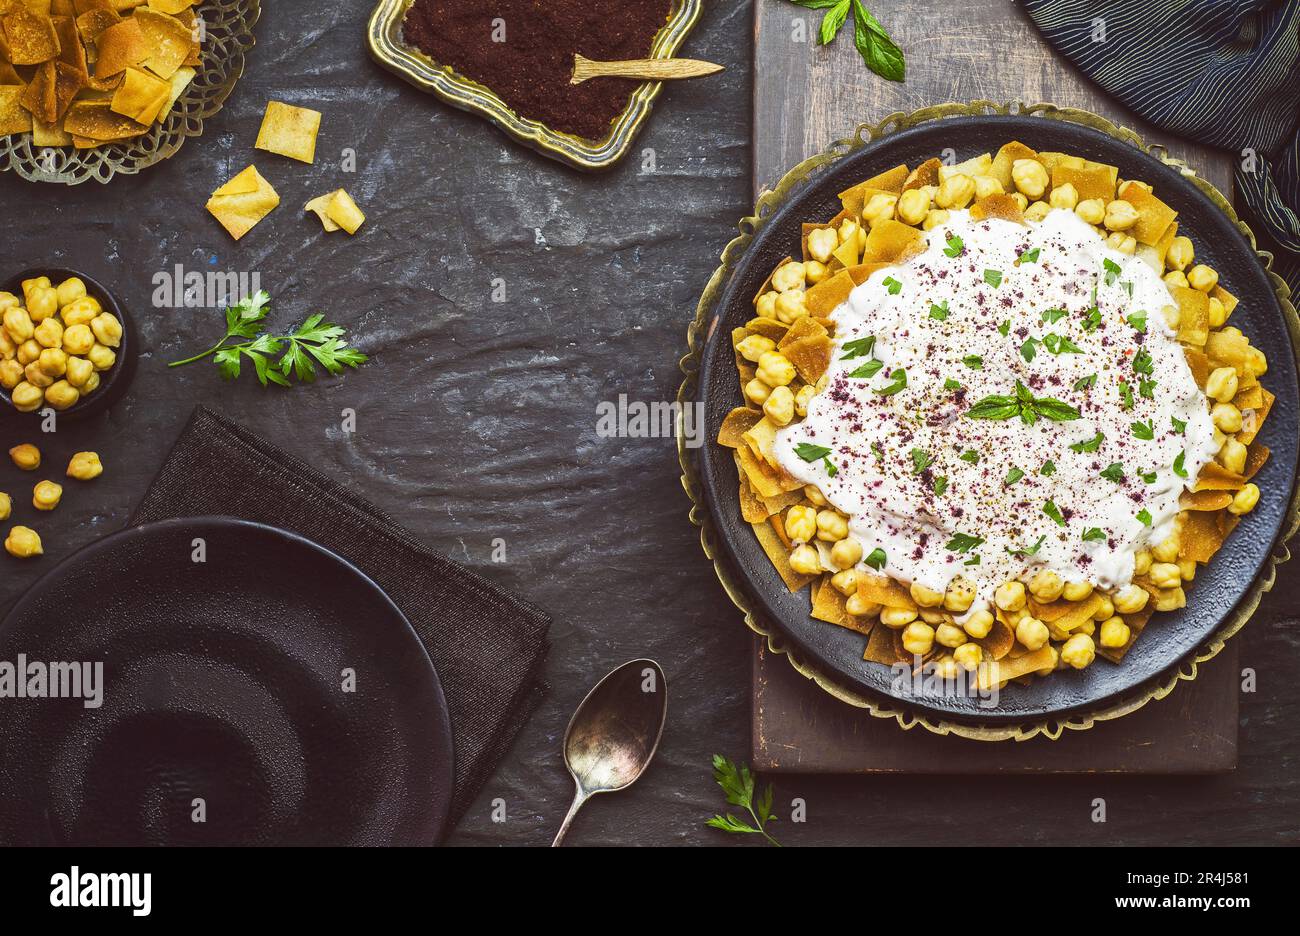 Arabic Cuisine; Lebanese authentic 